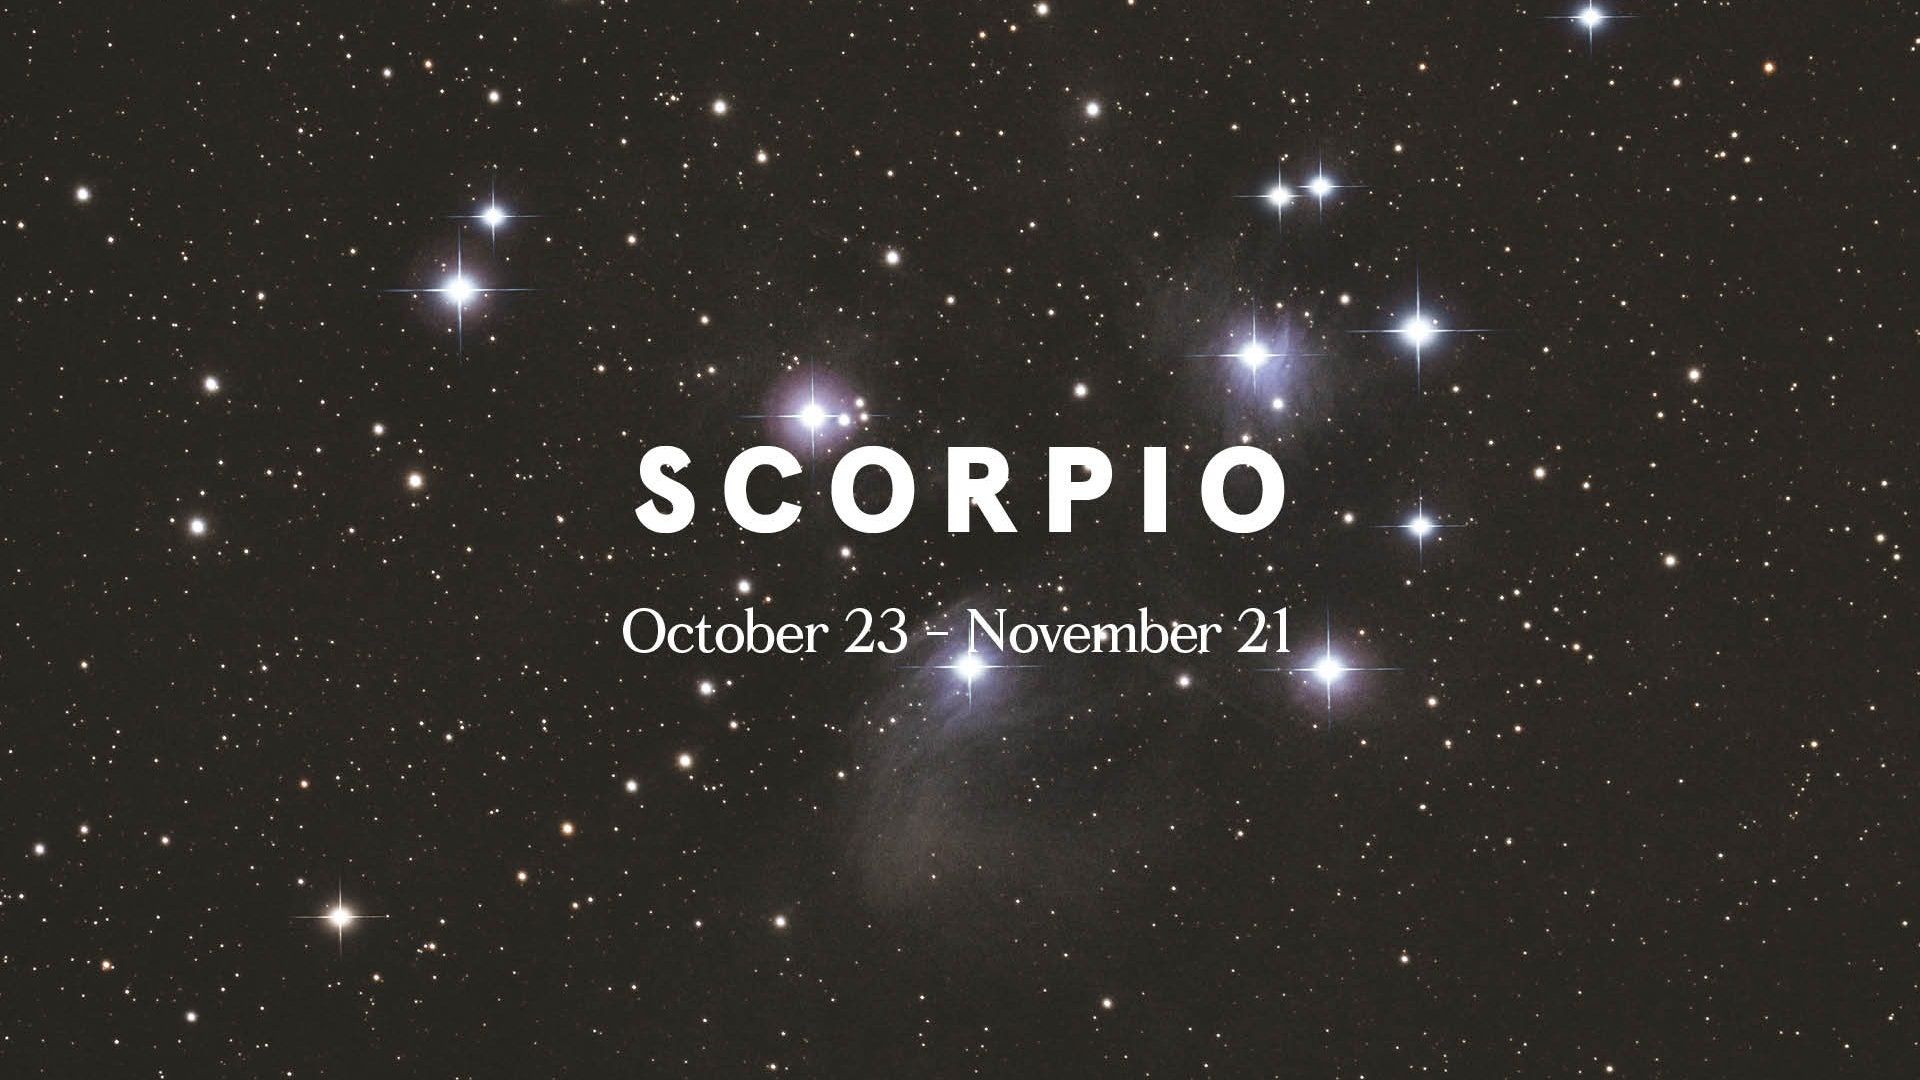 The Scorpio sign in white on a black background with white stars surrounding it. - Scorpio